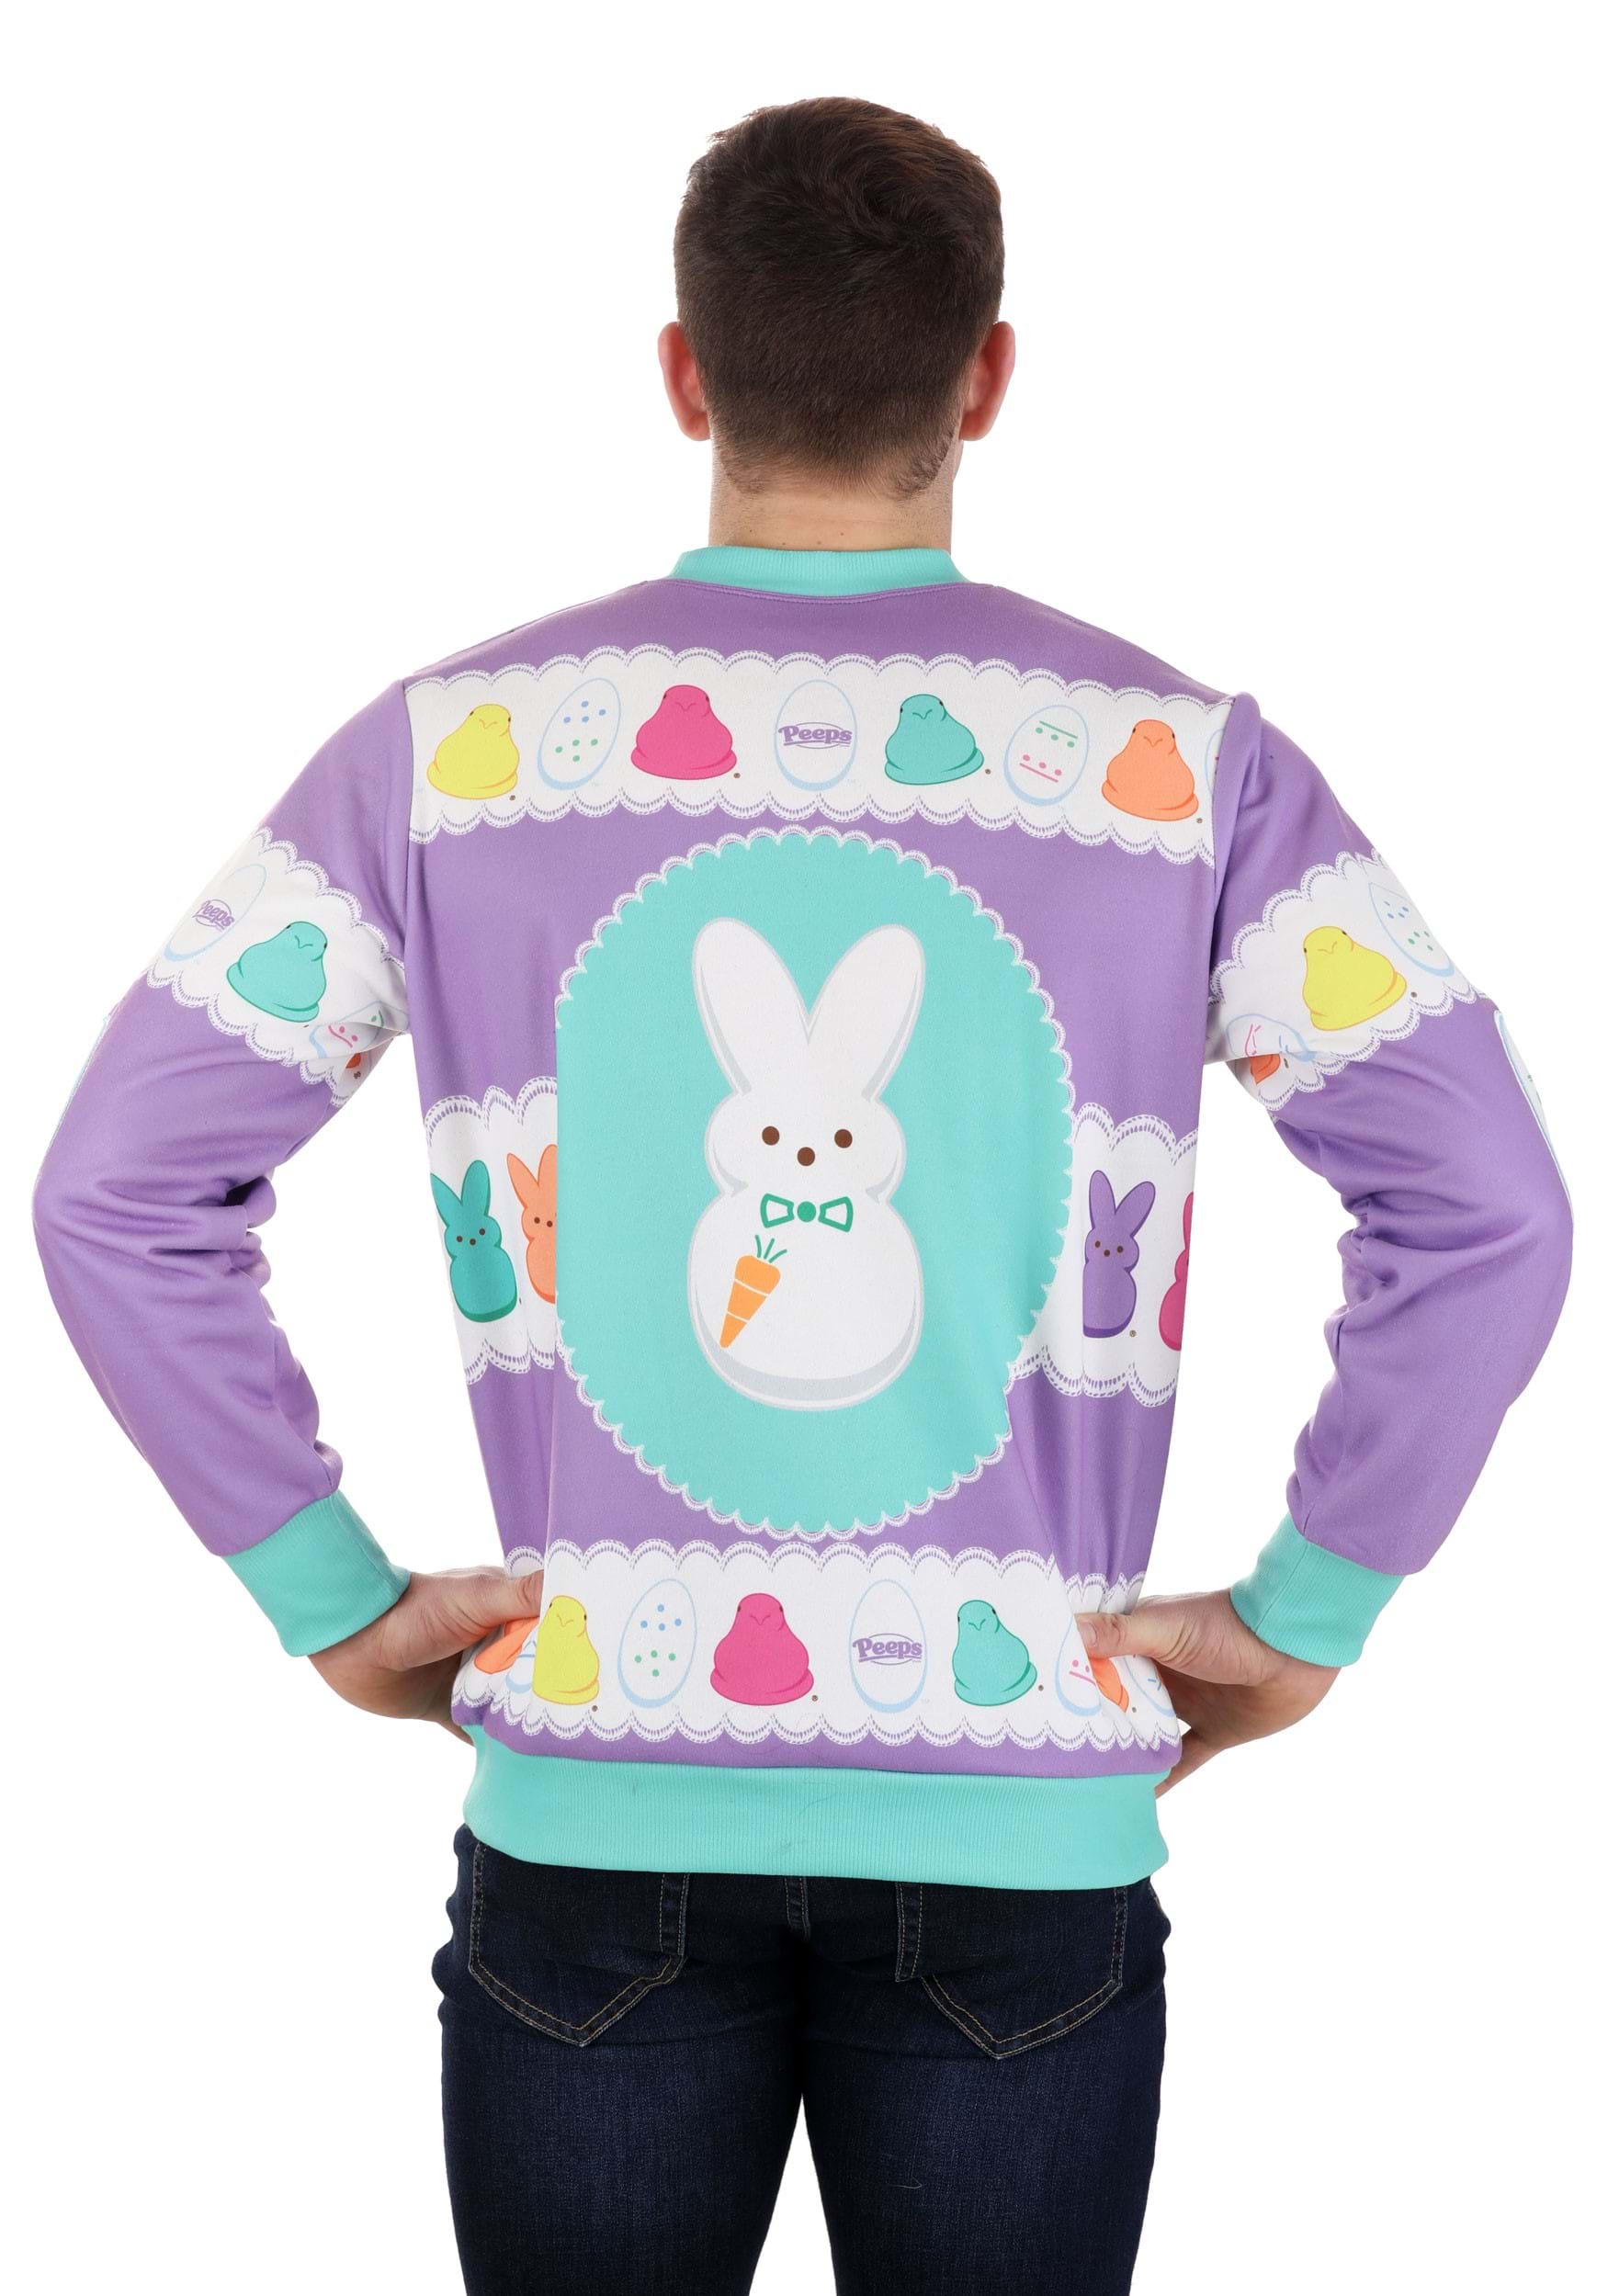 Peeps Ugly Easter Sweater